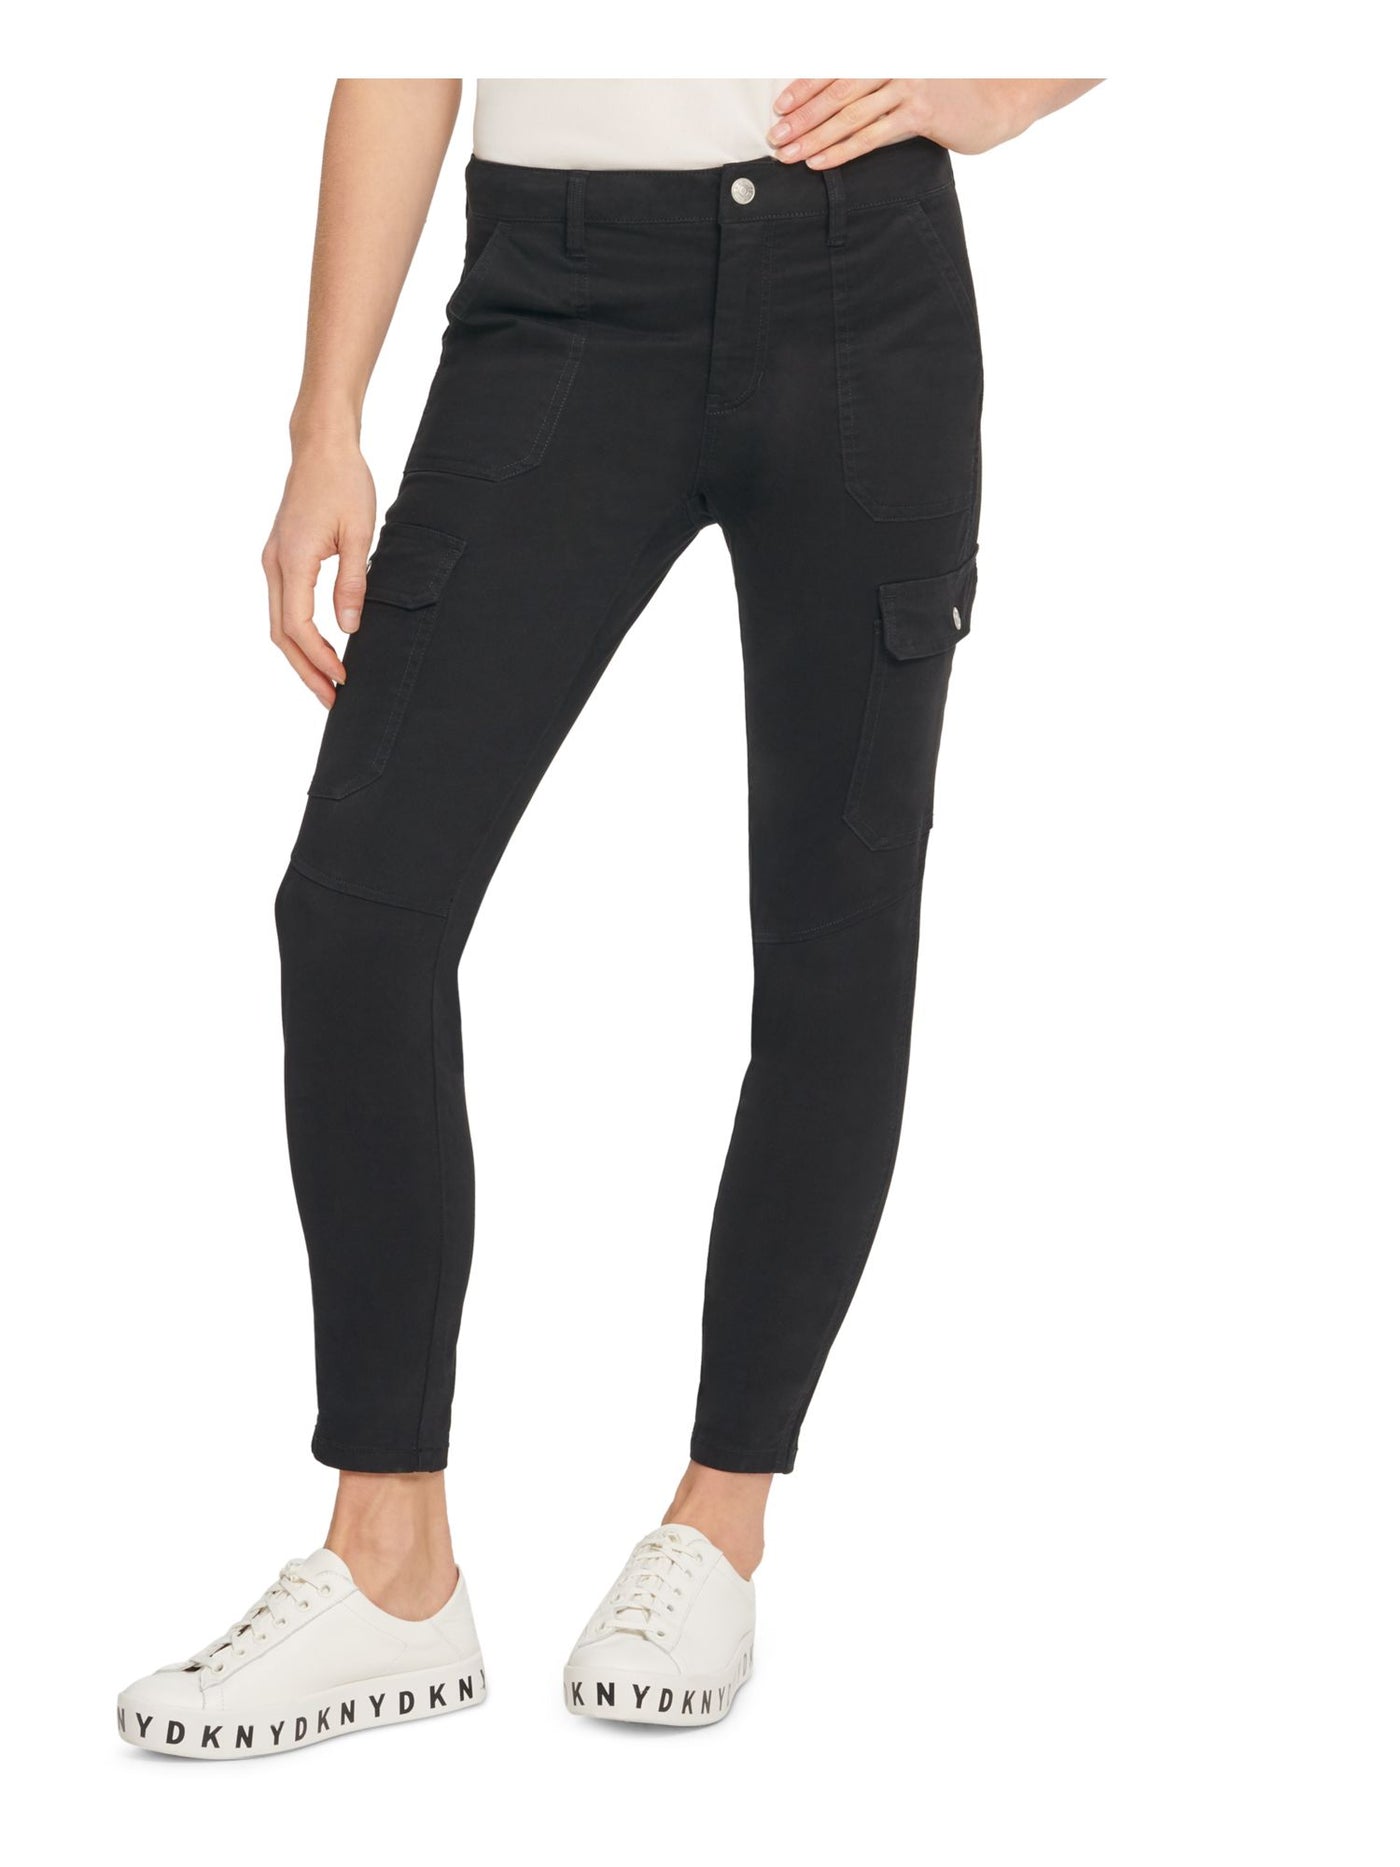 DKNY Womens Black Zippered Pocketed Skinny Pants 27 Waist